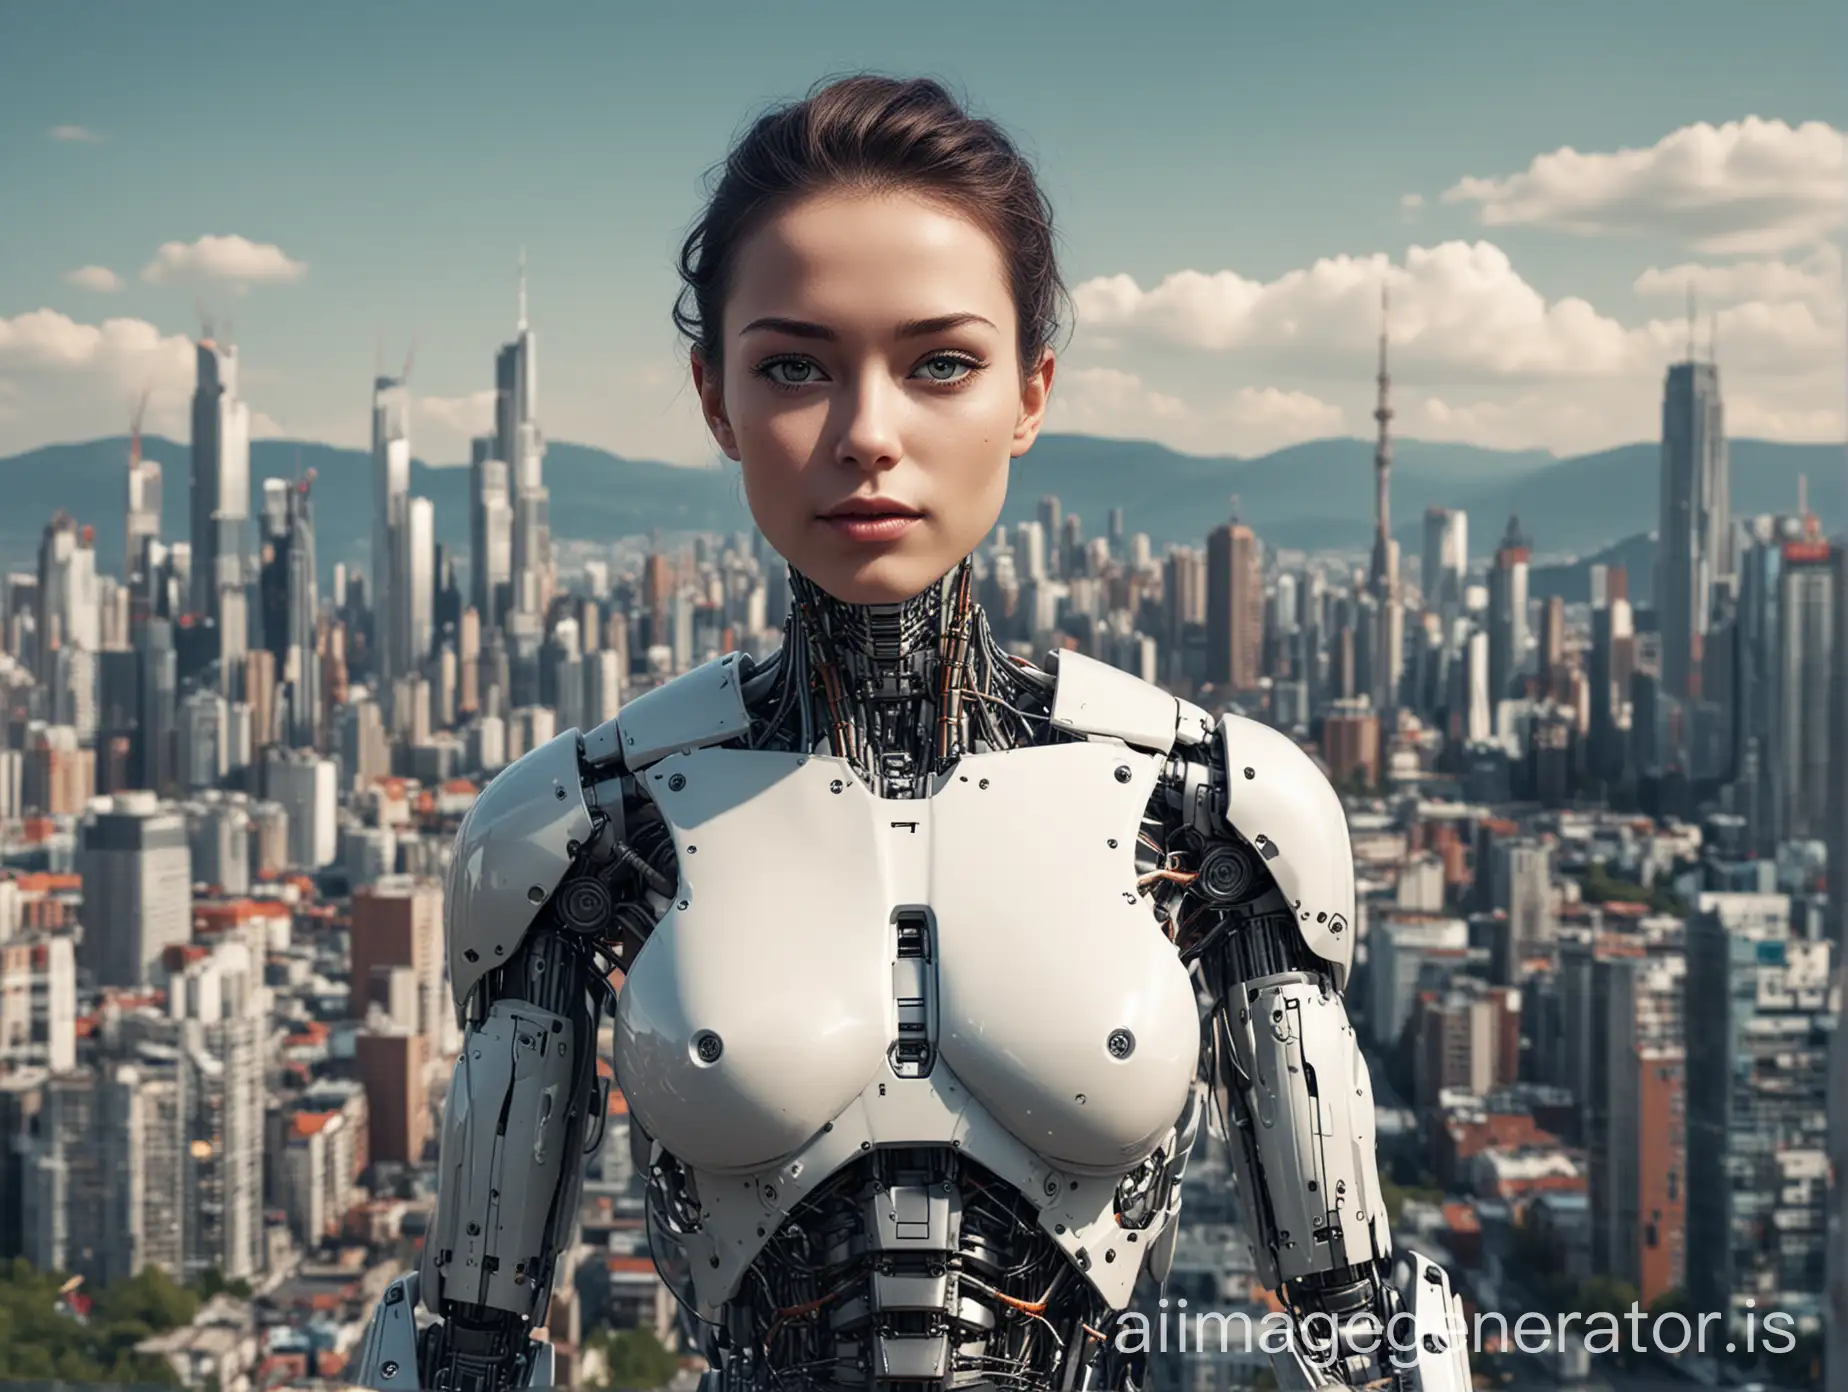 Futuristic-Cyborg-Model-with-Urban-Skyline-Backdrop